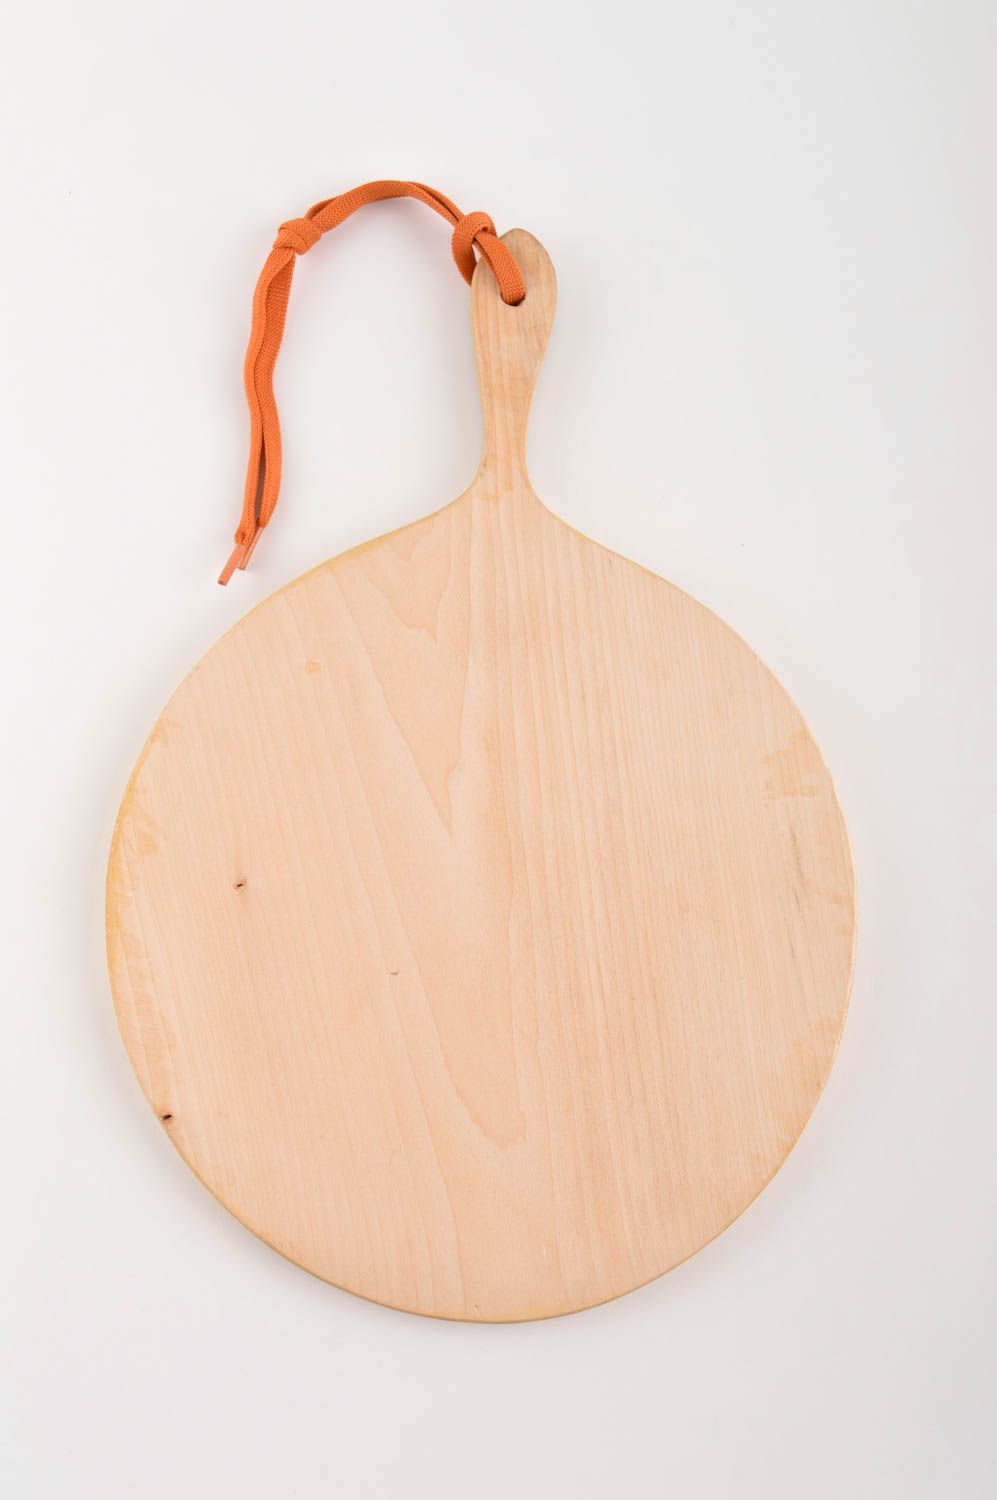 Handmade cutting board wooden chopping board wooden gifts souvenir ideas photo 3